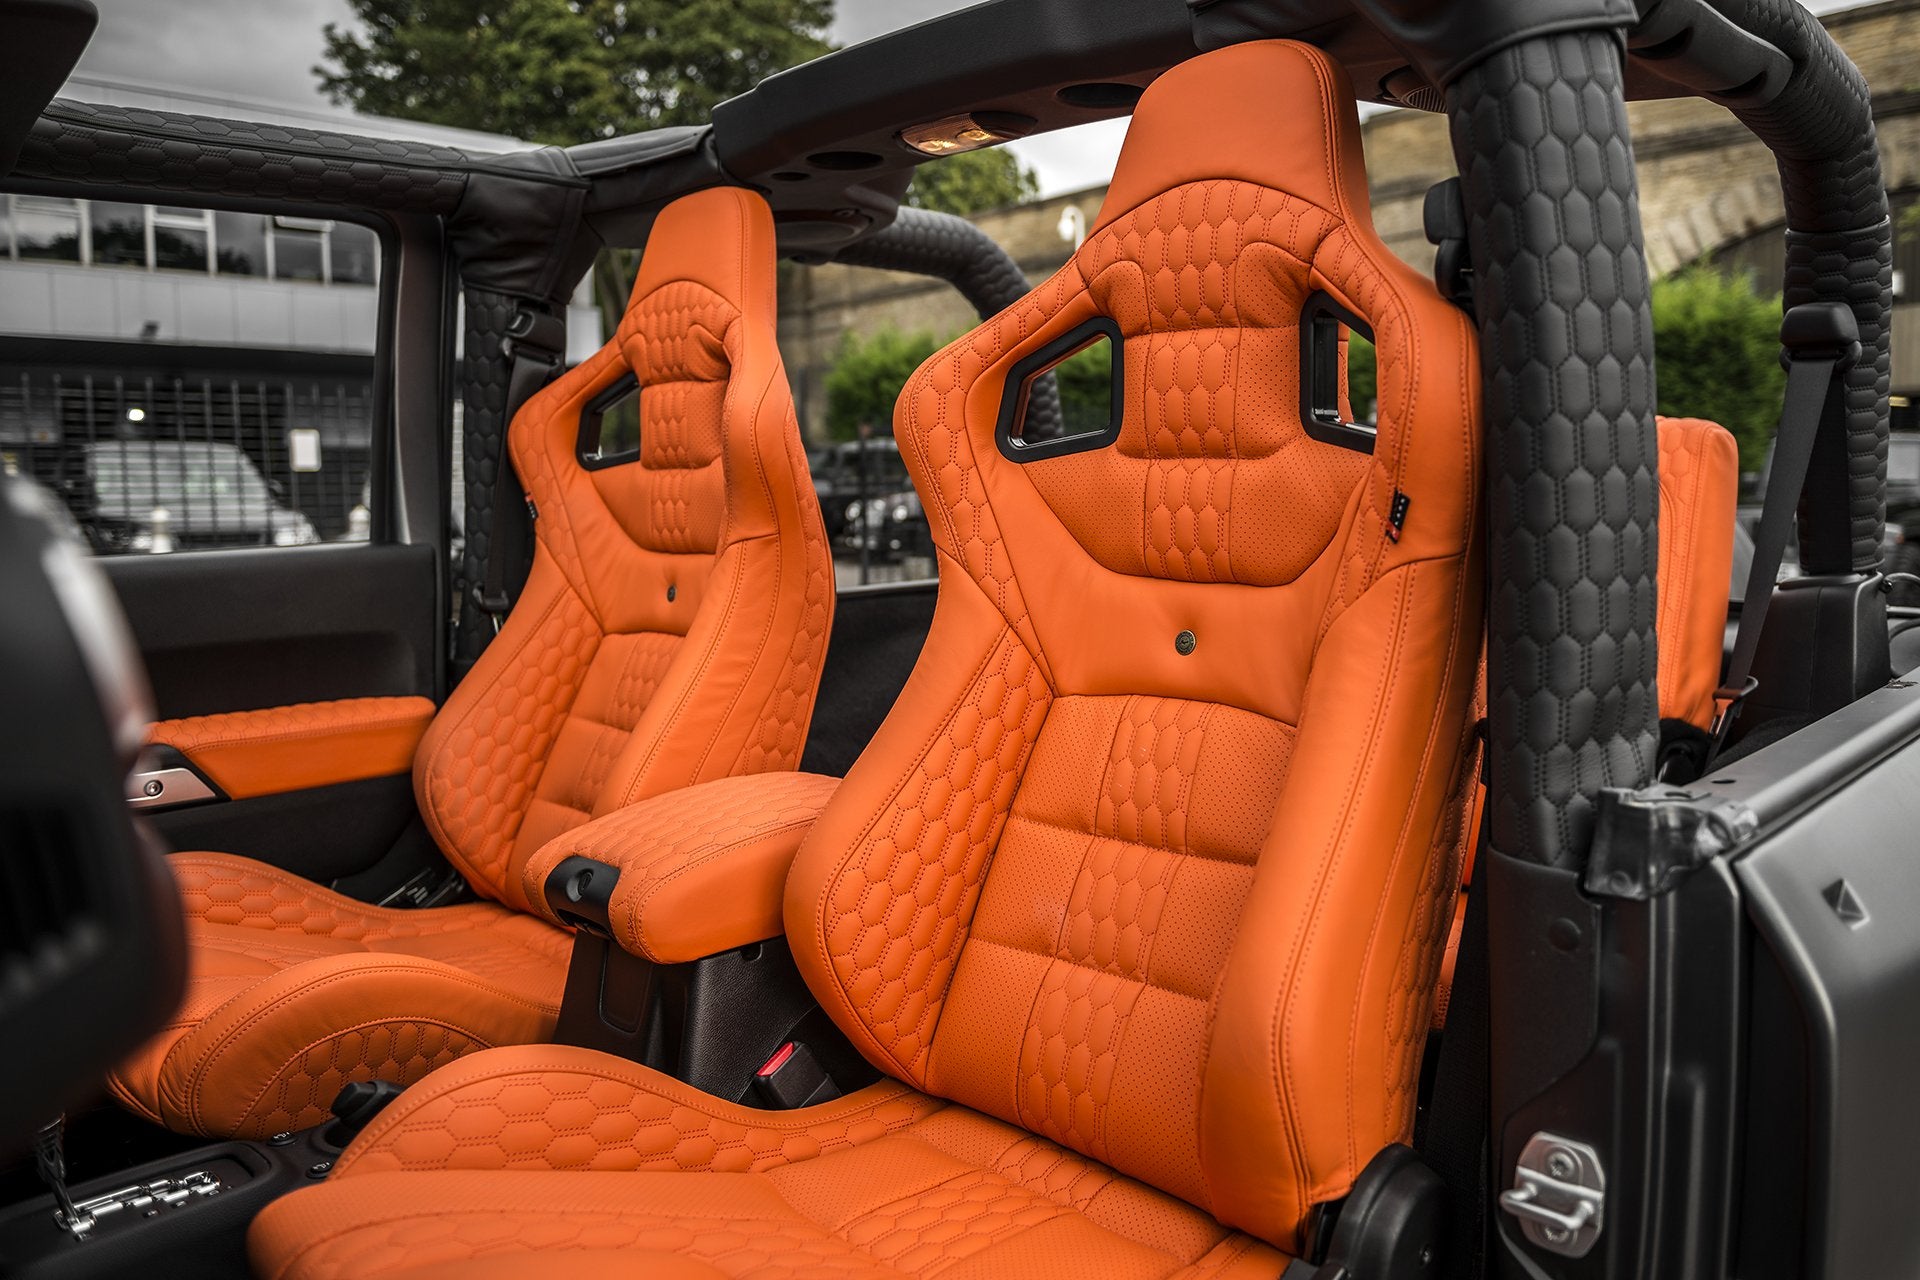 Arriba 70+ imagen jeep wrangler leather interior